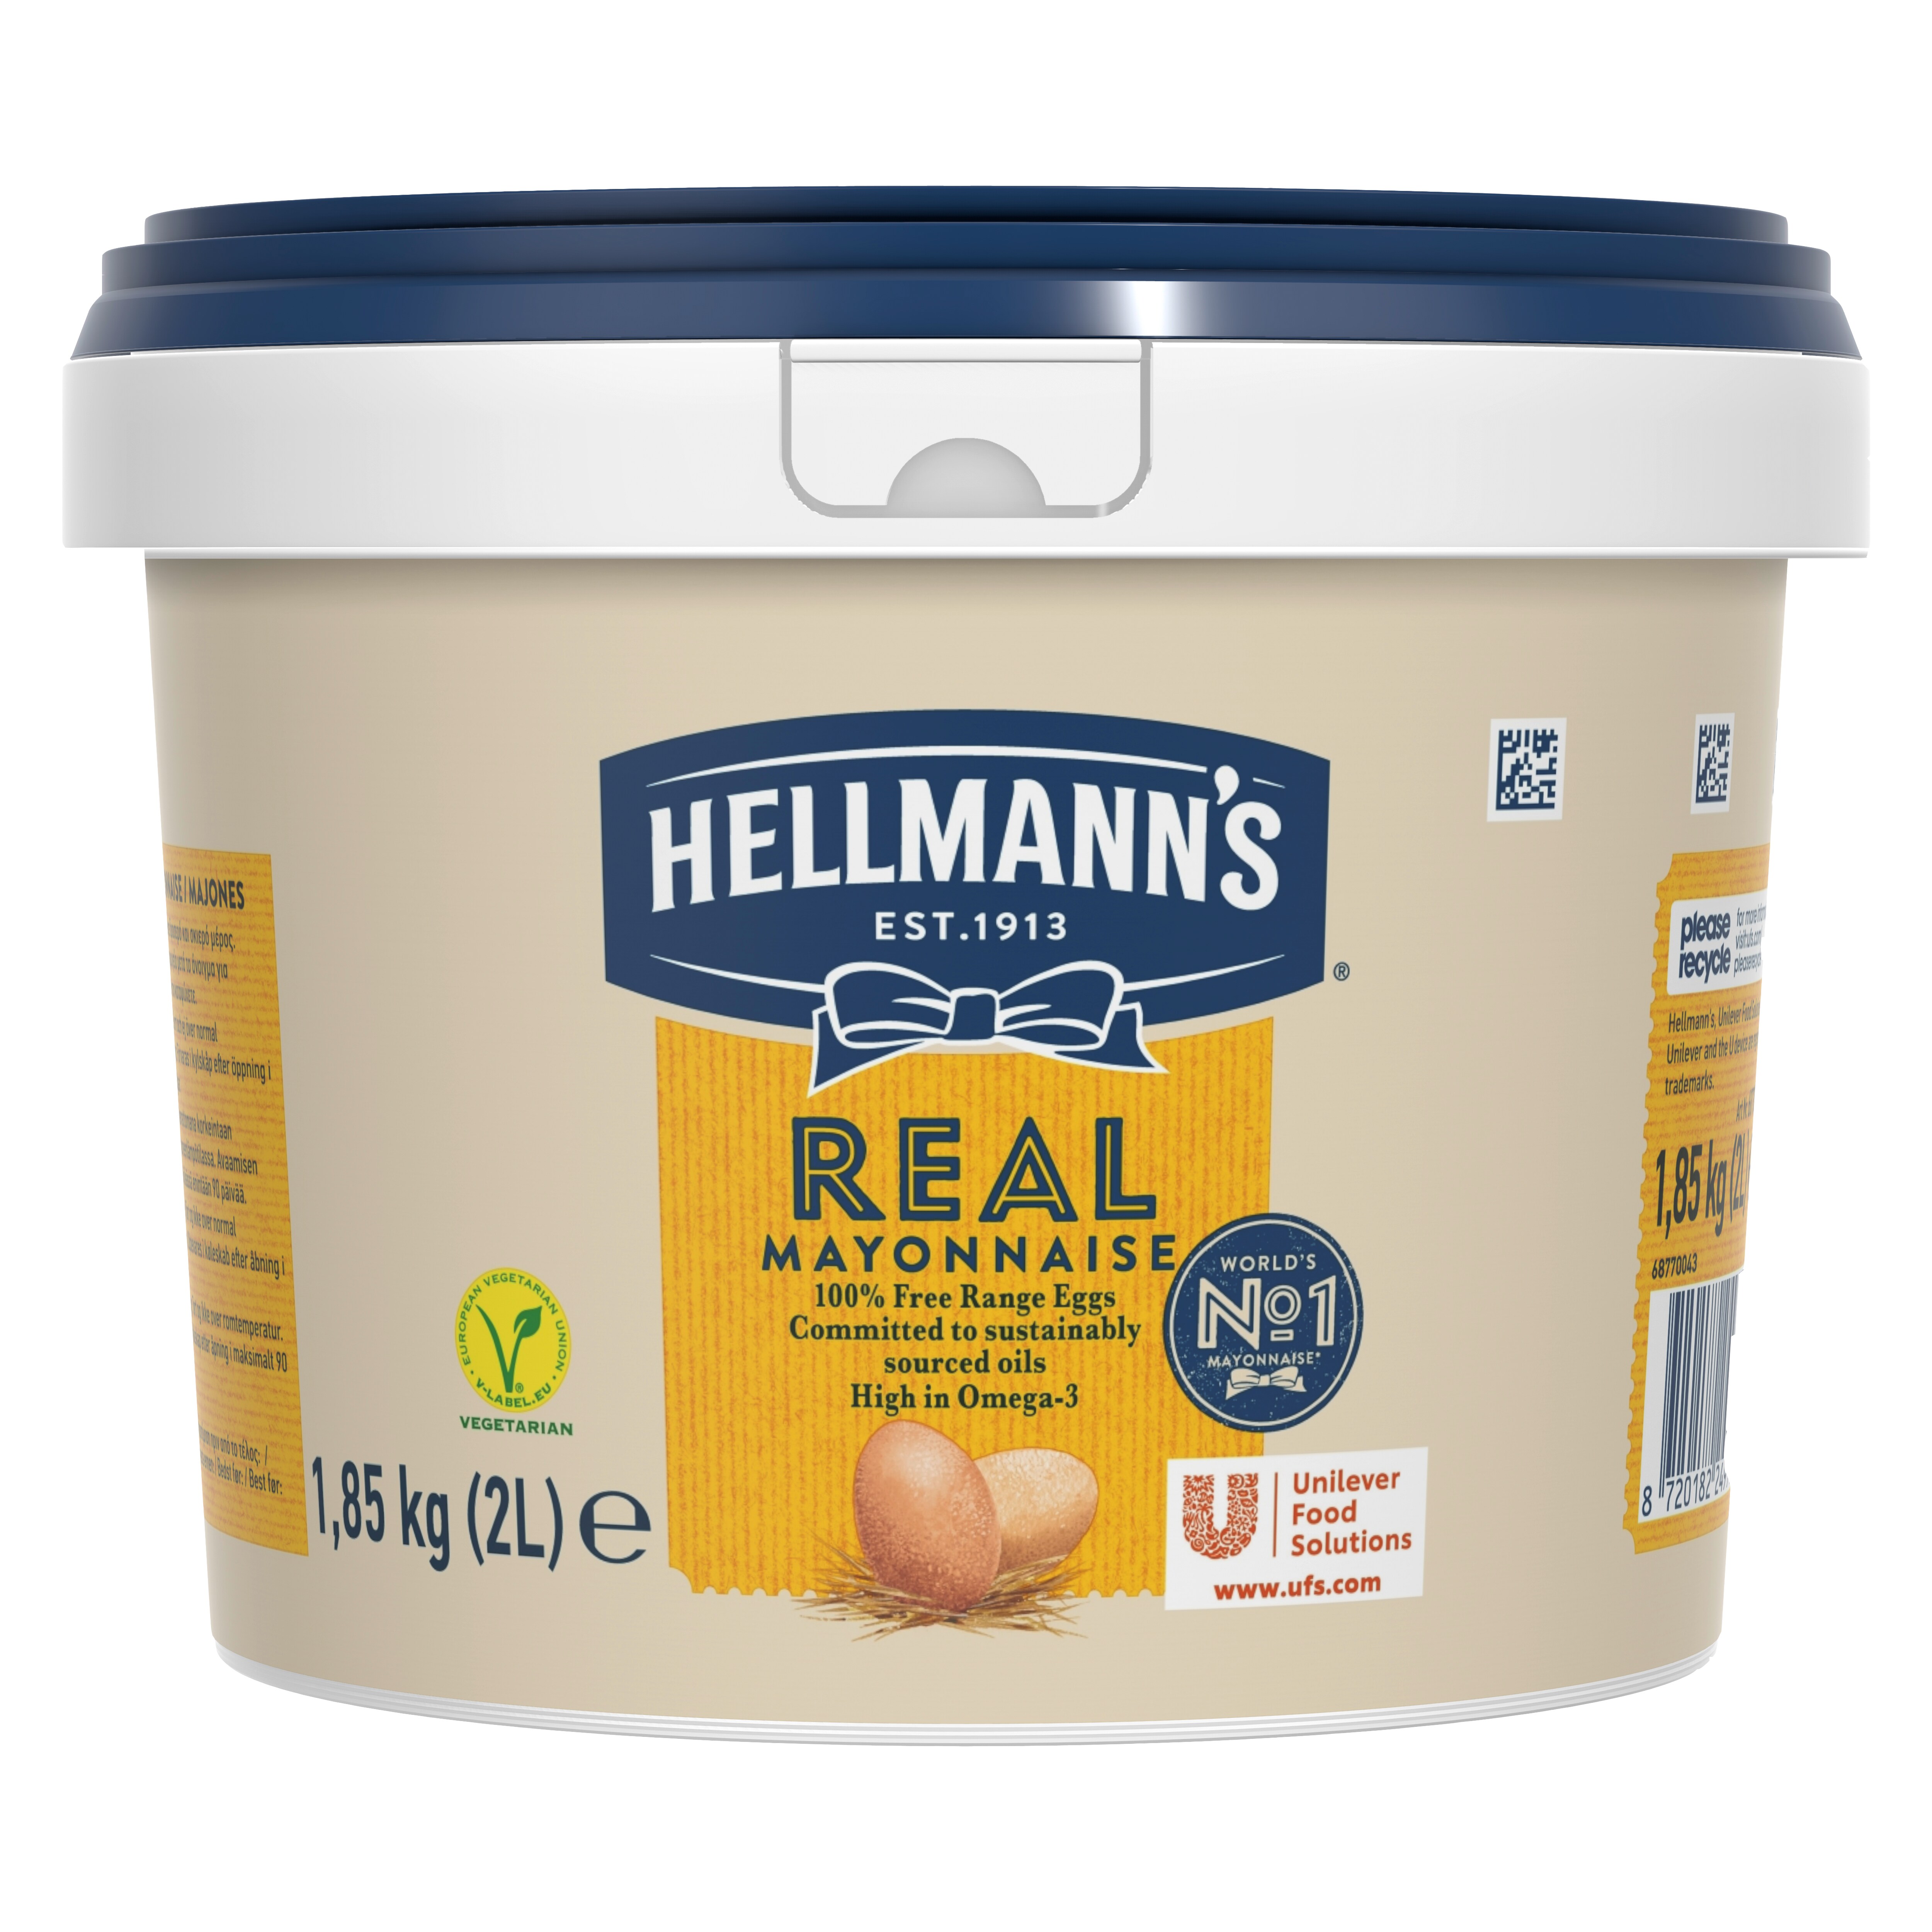 Hellmann's Real Majoneesi 2 L / 1,85 kg